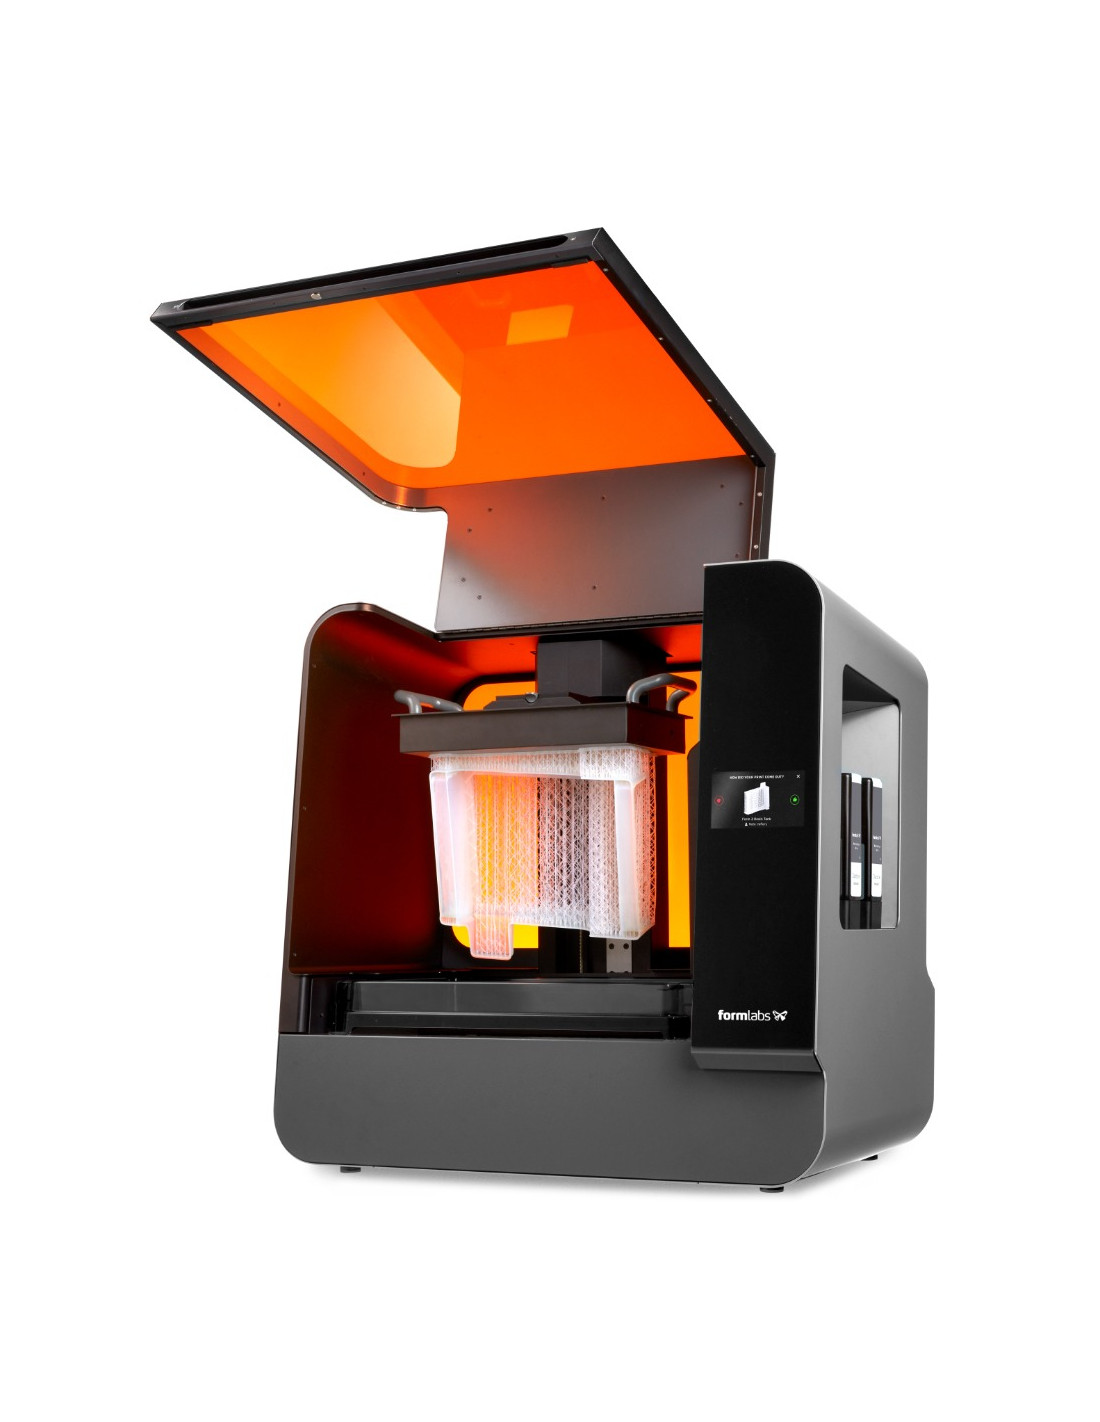 Impresora 3D FormLabs Form 3L